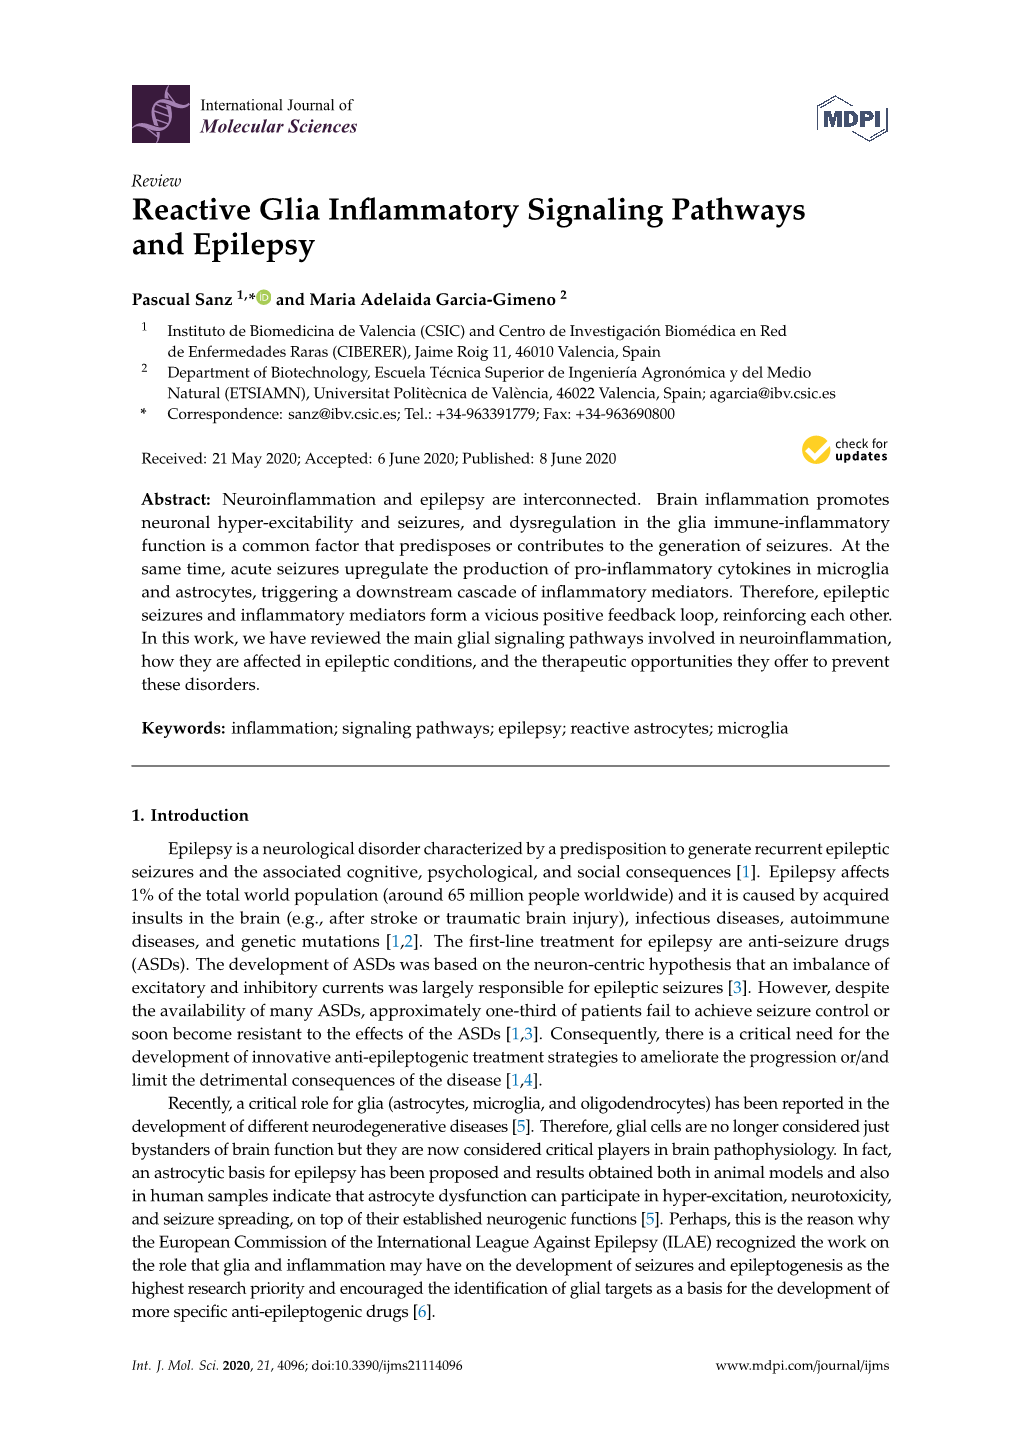 Reactive Glia Inflammatory Signaling Pathways and Epilepsy